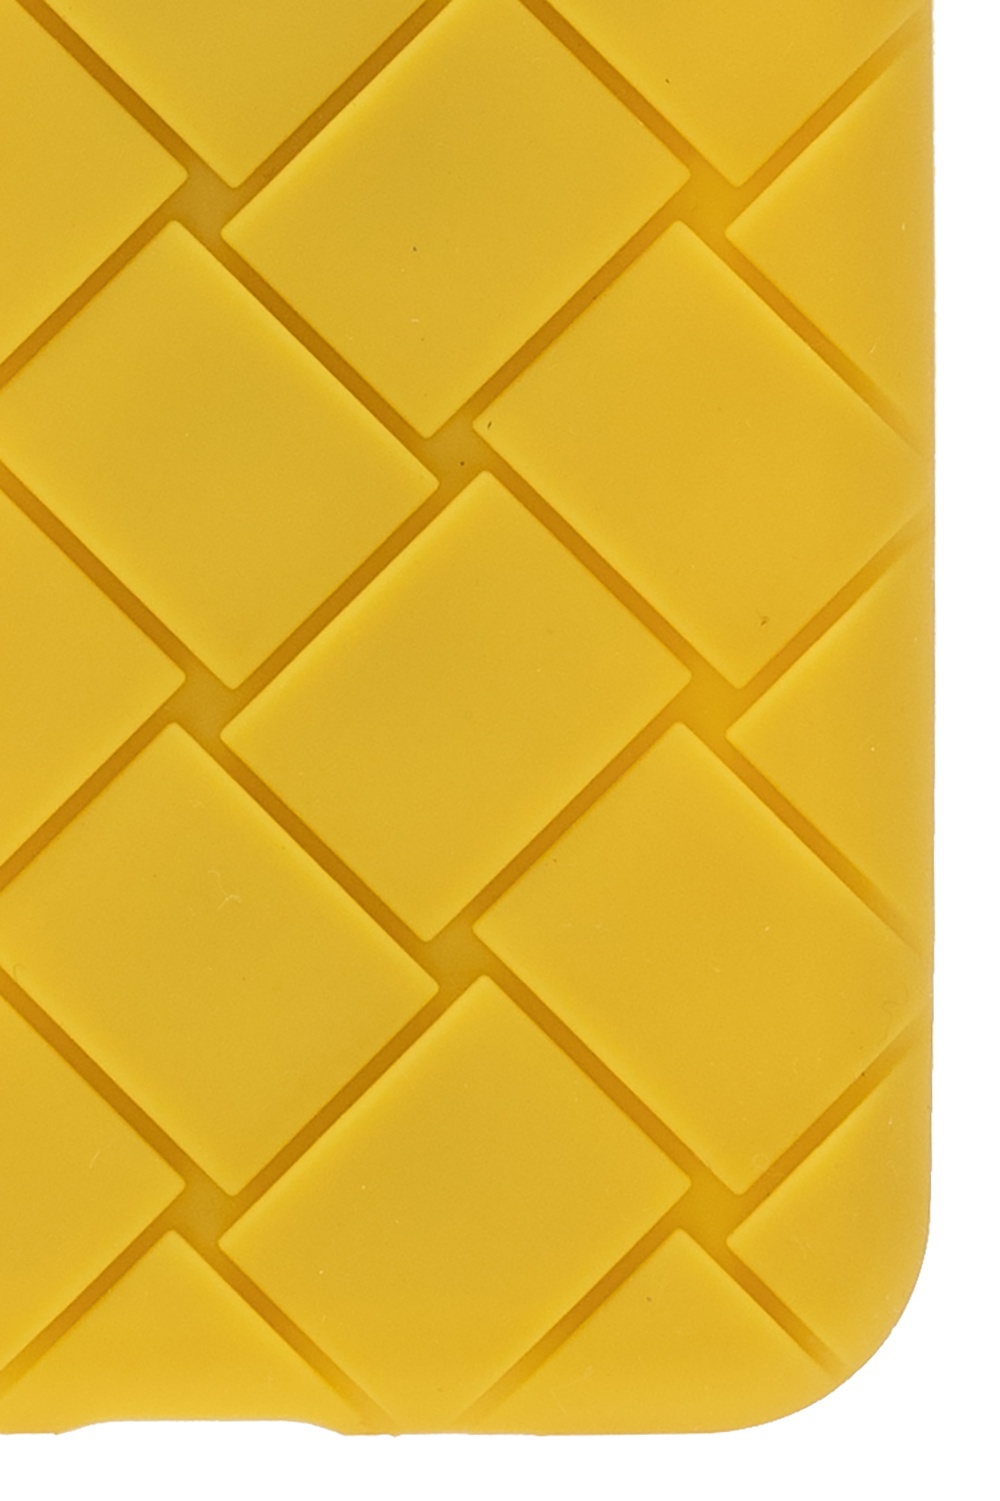 Bottega Veneta - Intrecciato Nappa Leather iPhone 11 Pro Case